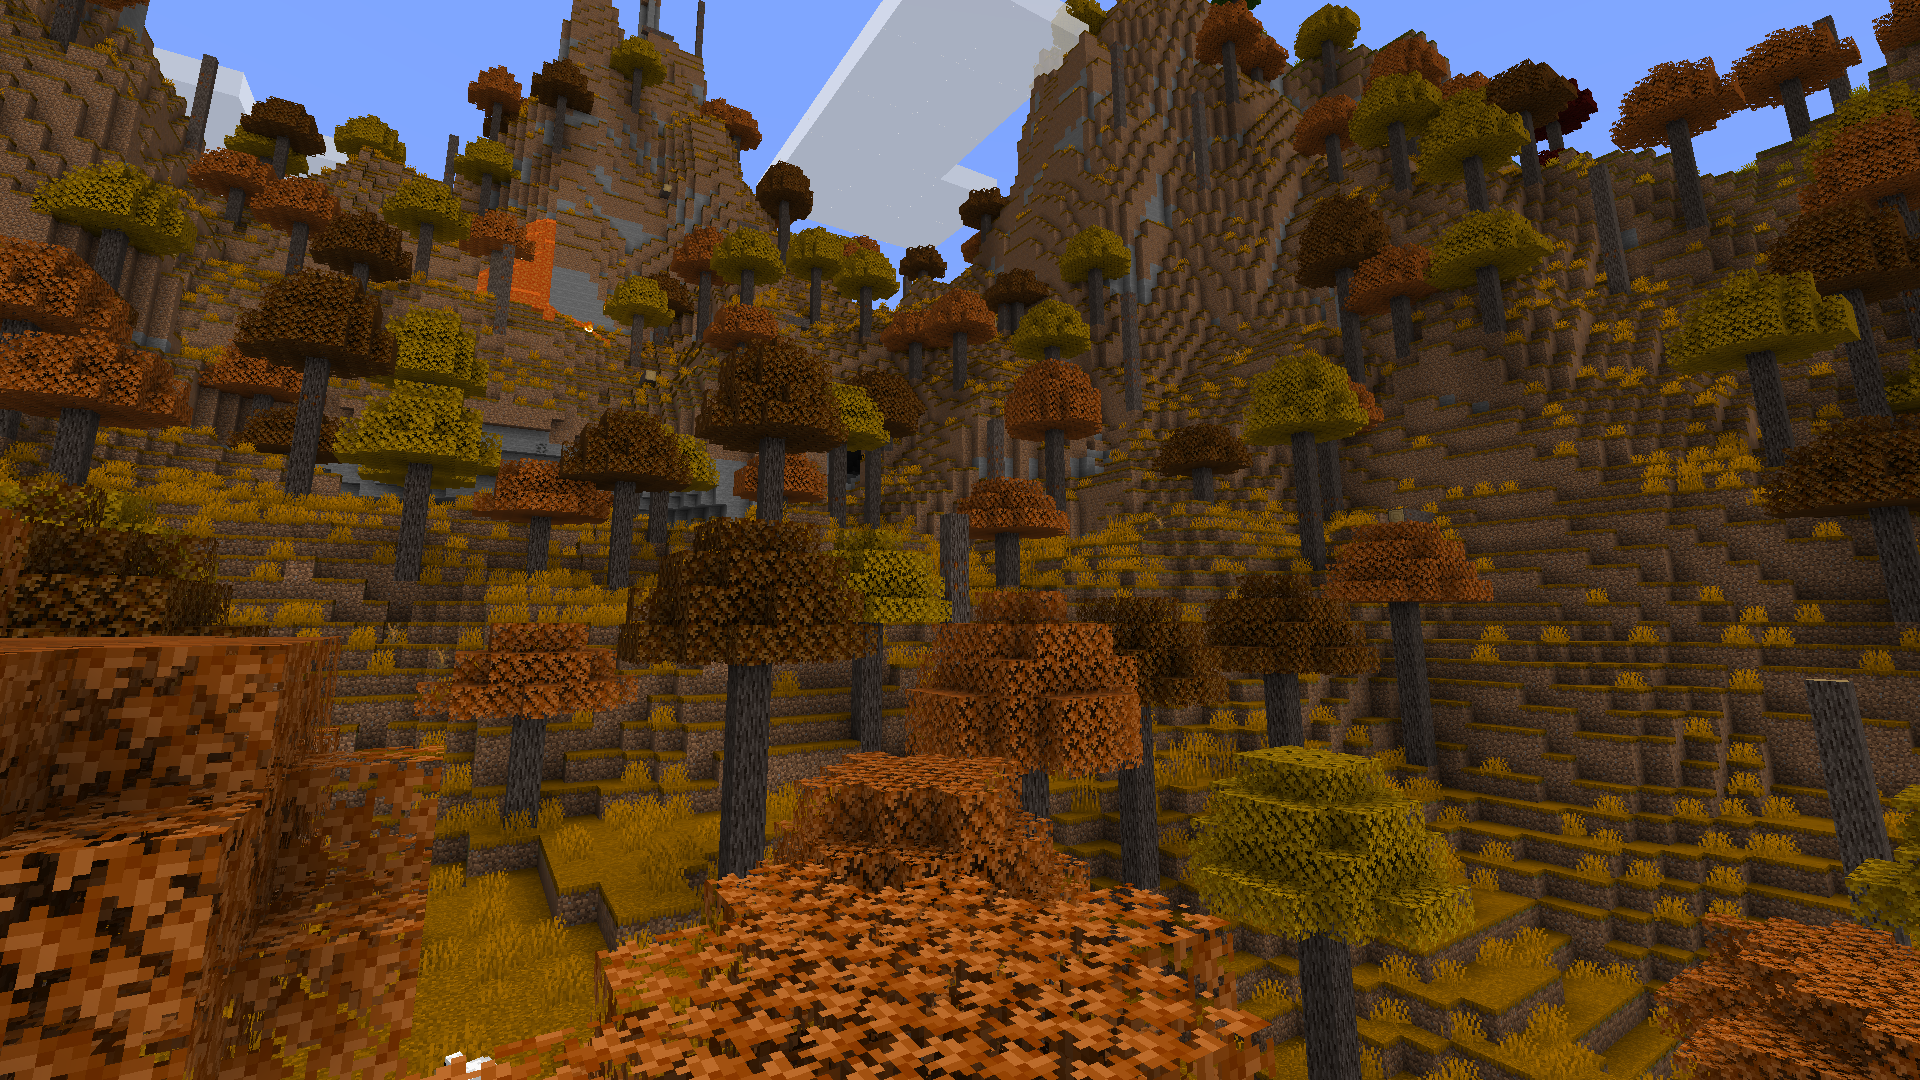 Terrains screenshot 3